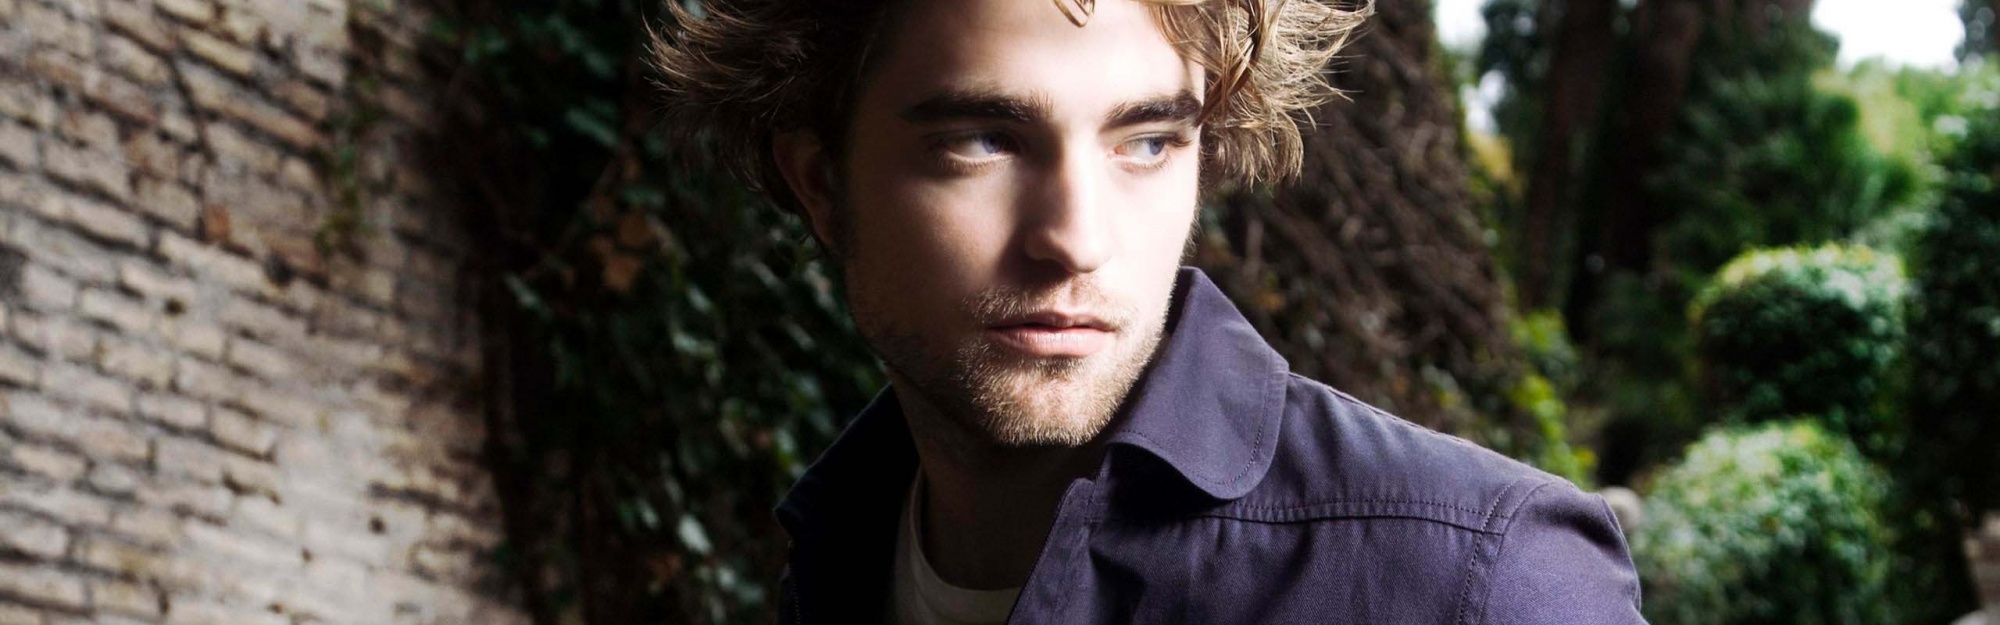 Robert Pattinson Long Hair